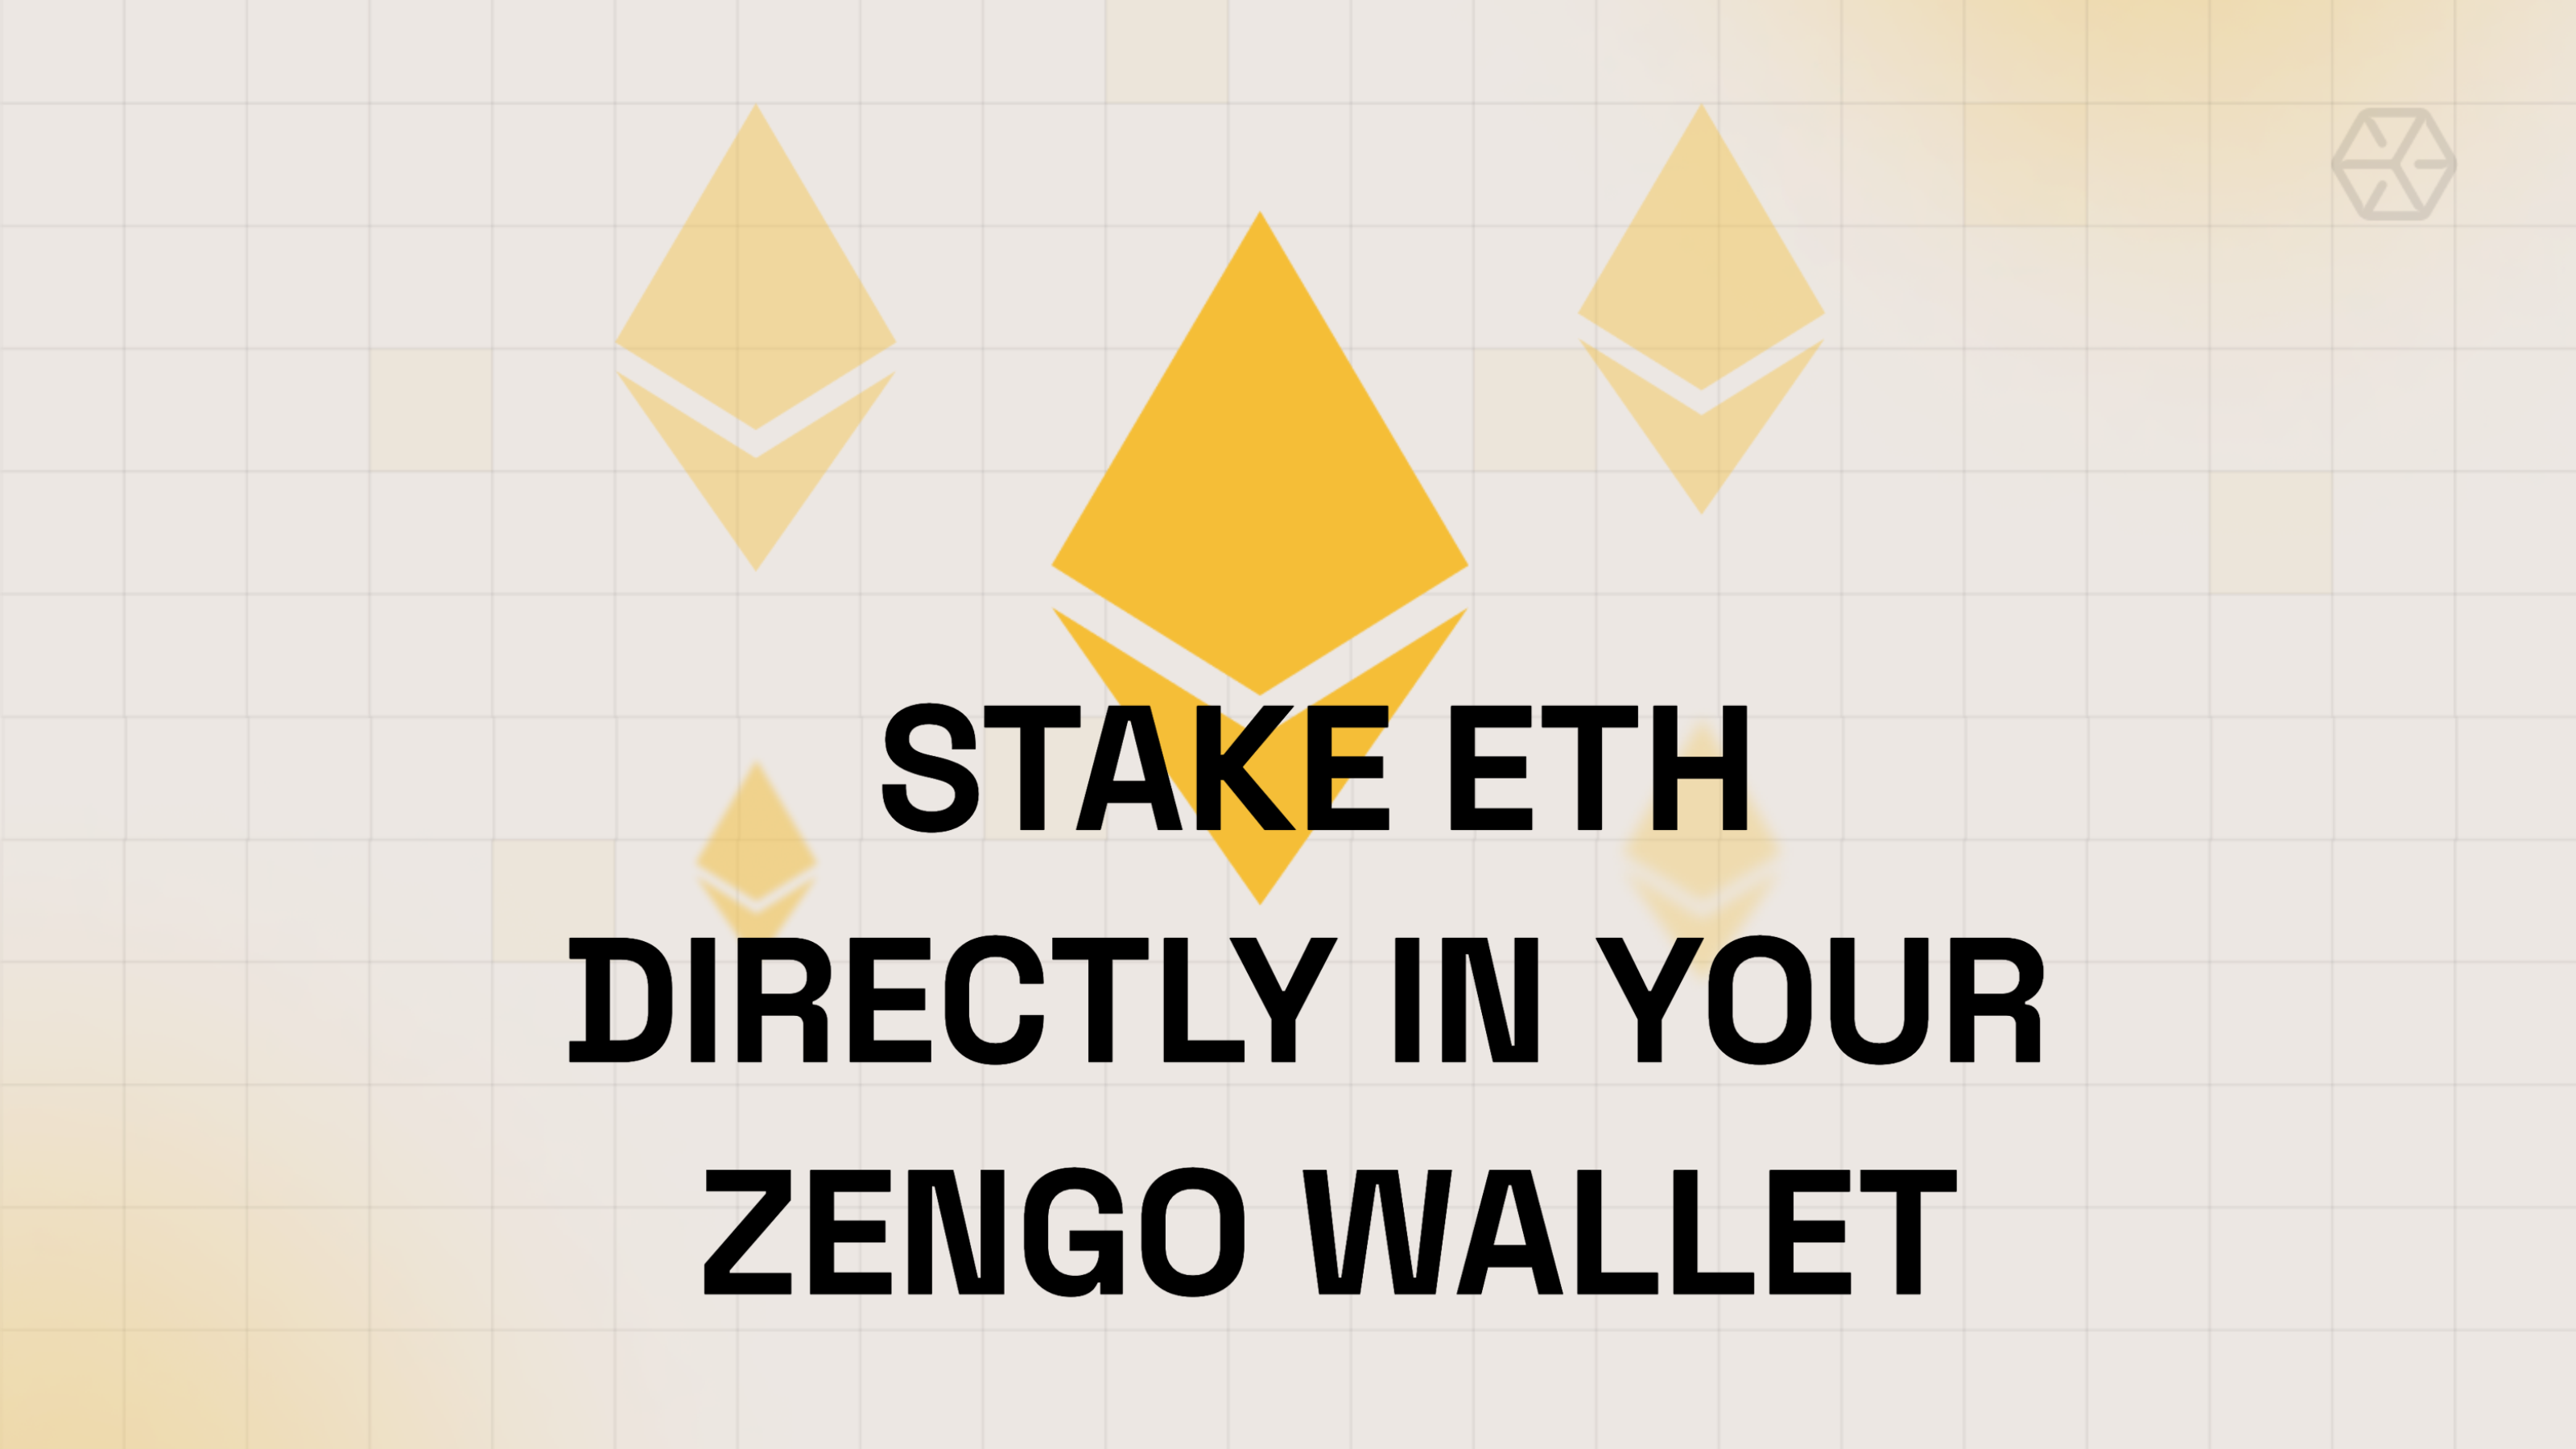 How to Stake ETH via Zengo Wallet